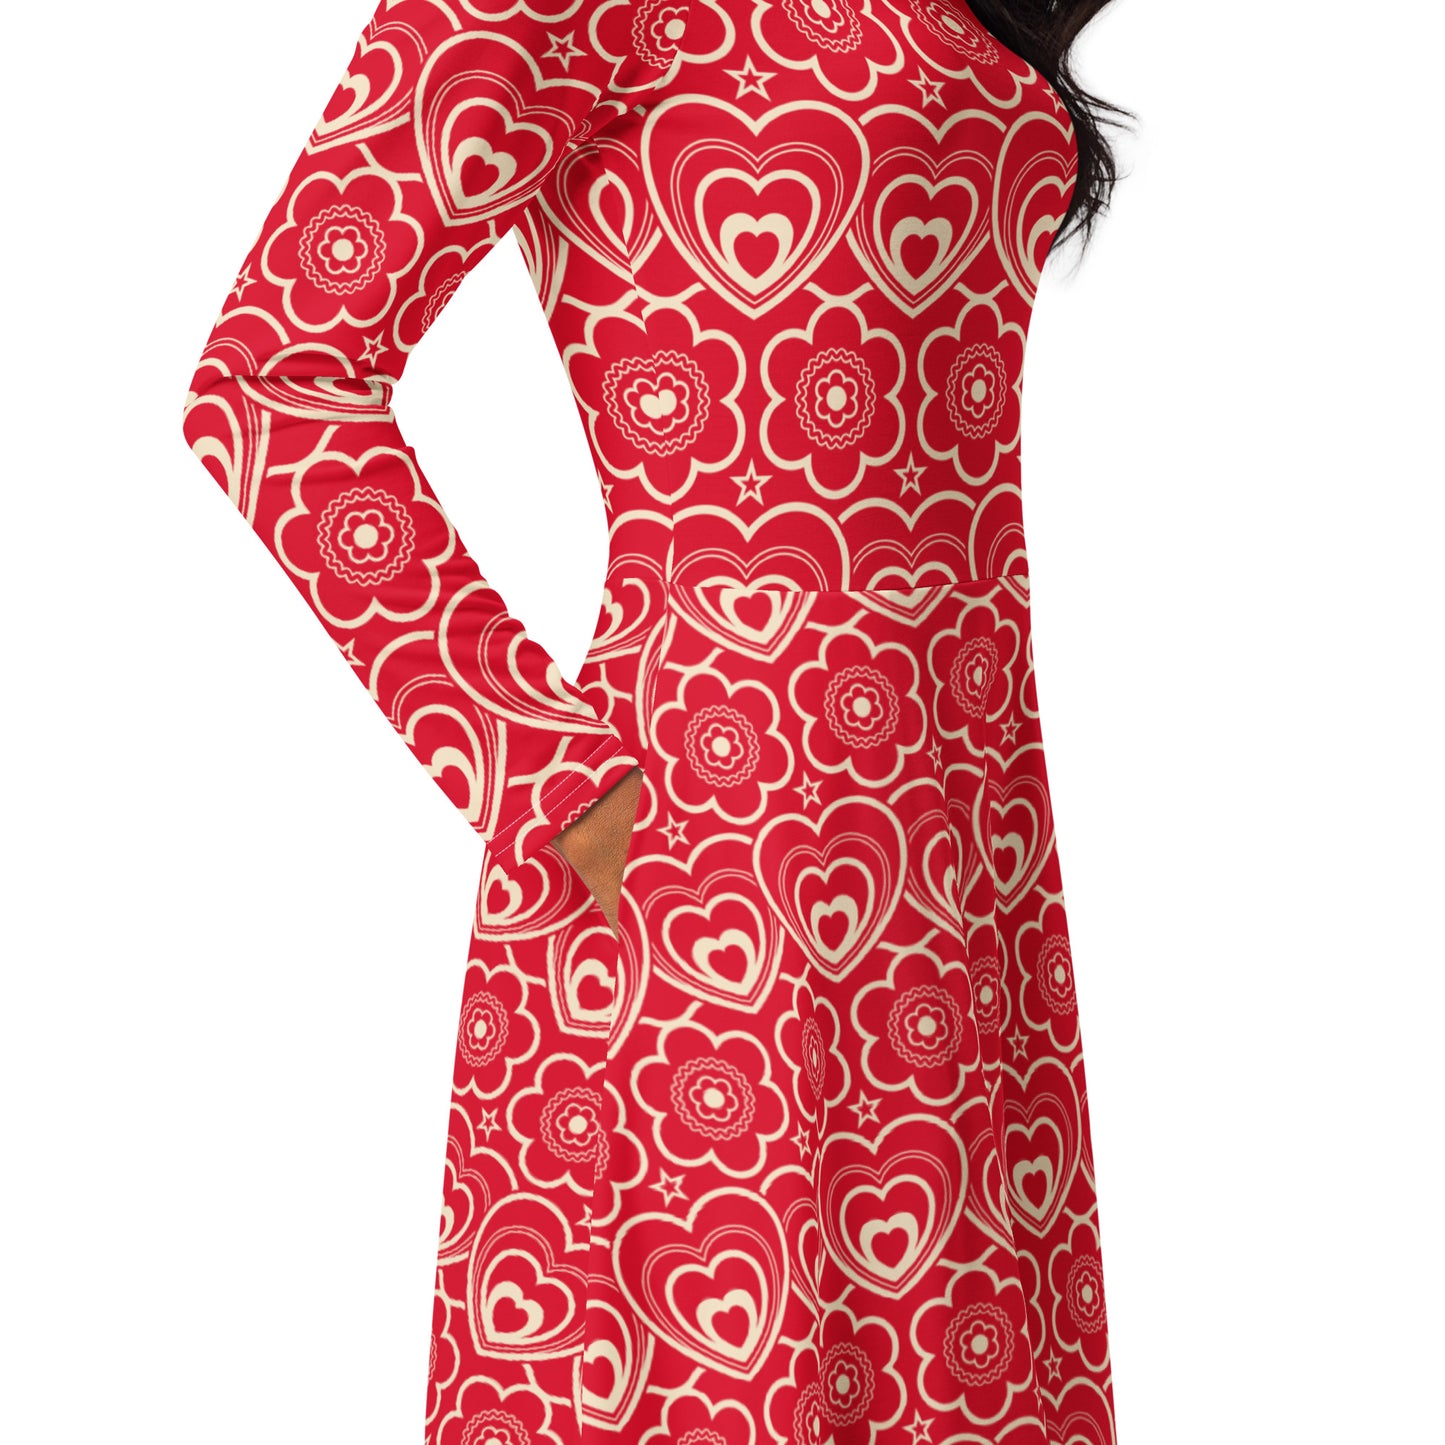 RAMONA red - Midi dress with long sleeves and handy pockets